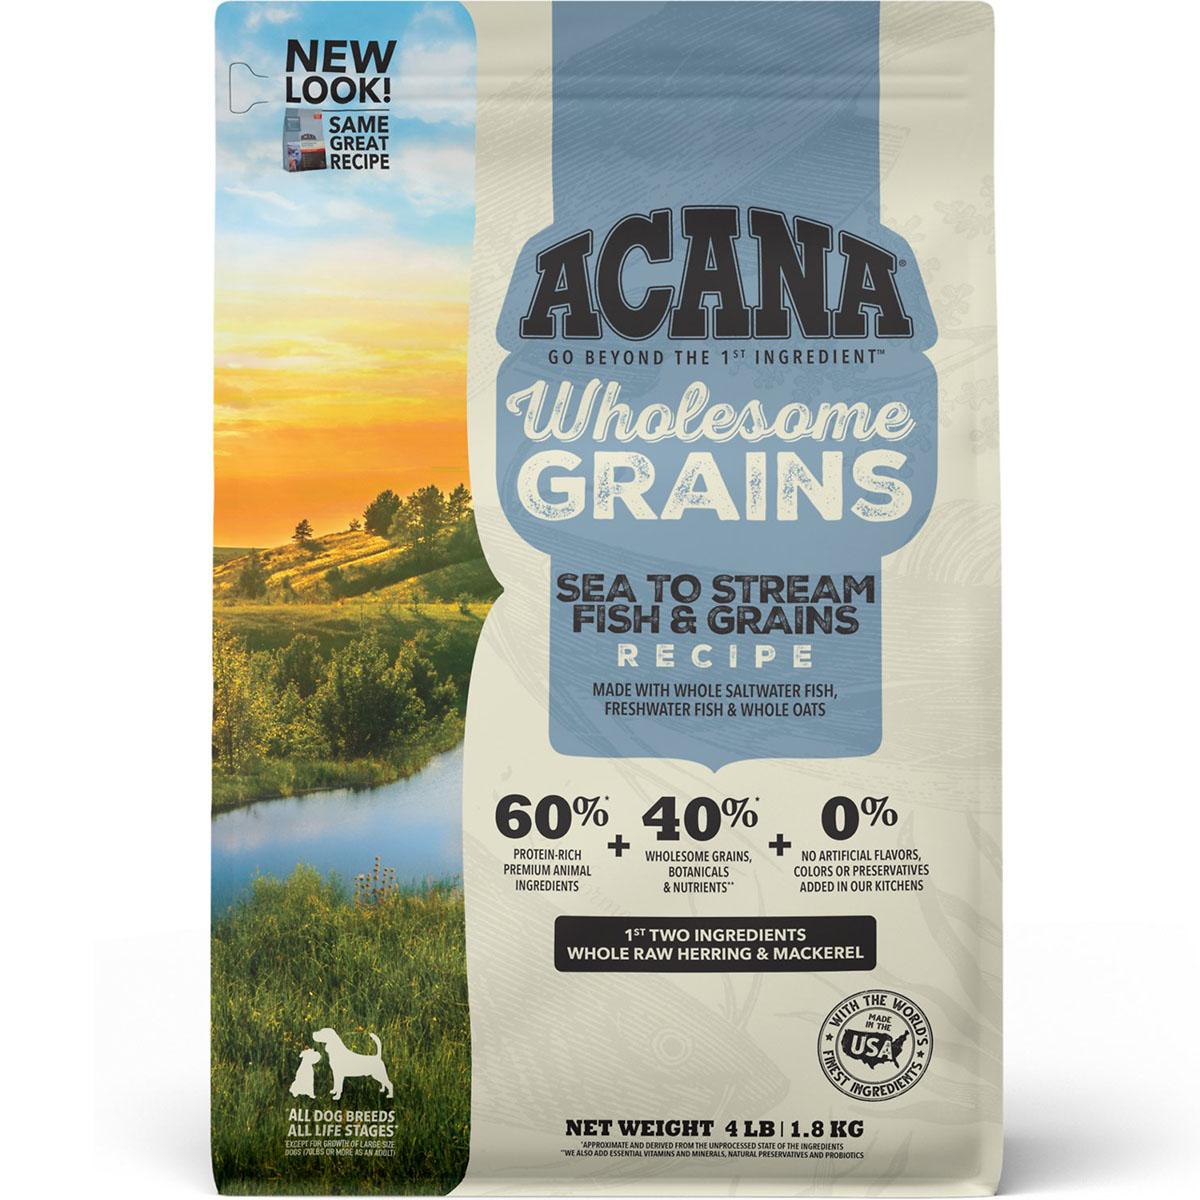 Acana Wholesome Grains Sea to Stream Fish & Grains Recipe Dry Dog Food